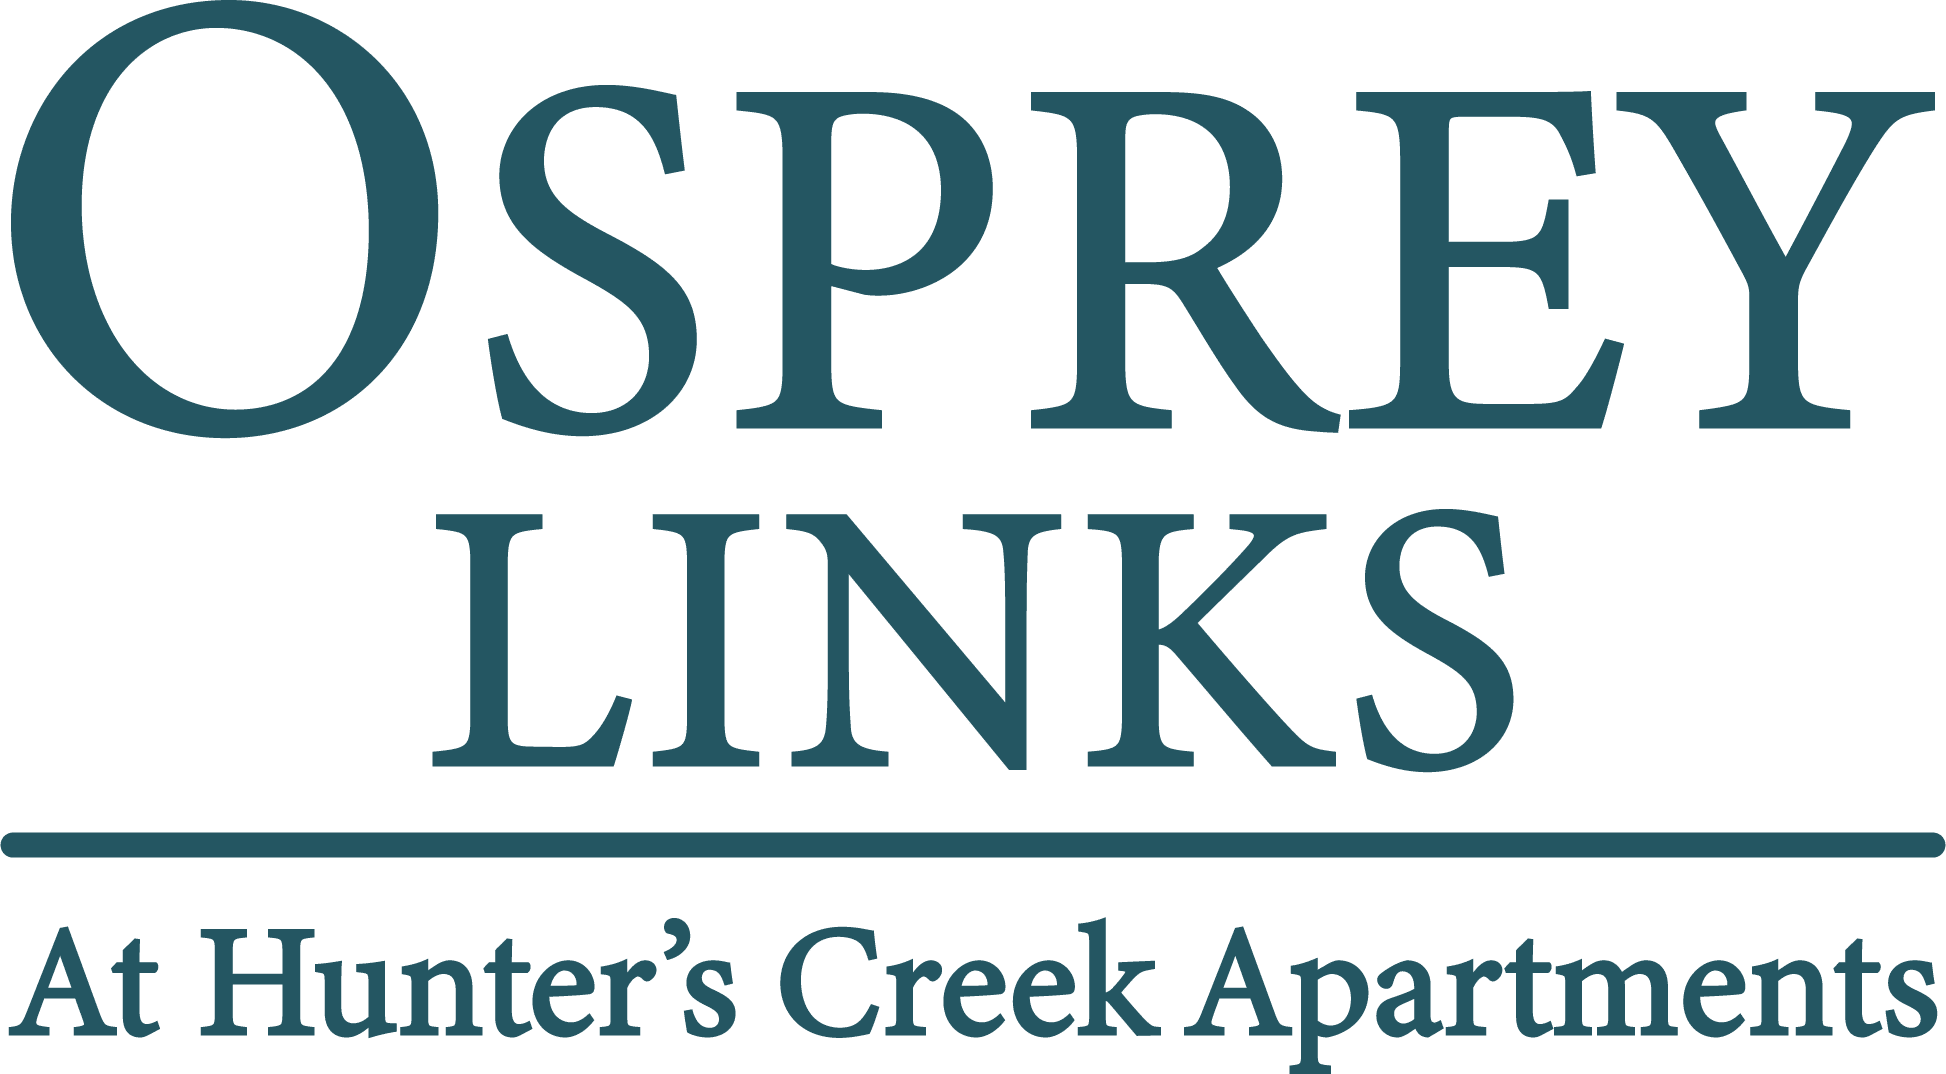 Osprey Links at Hunters Creek Apartments